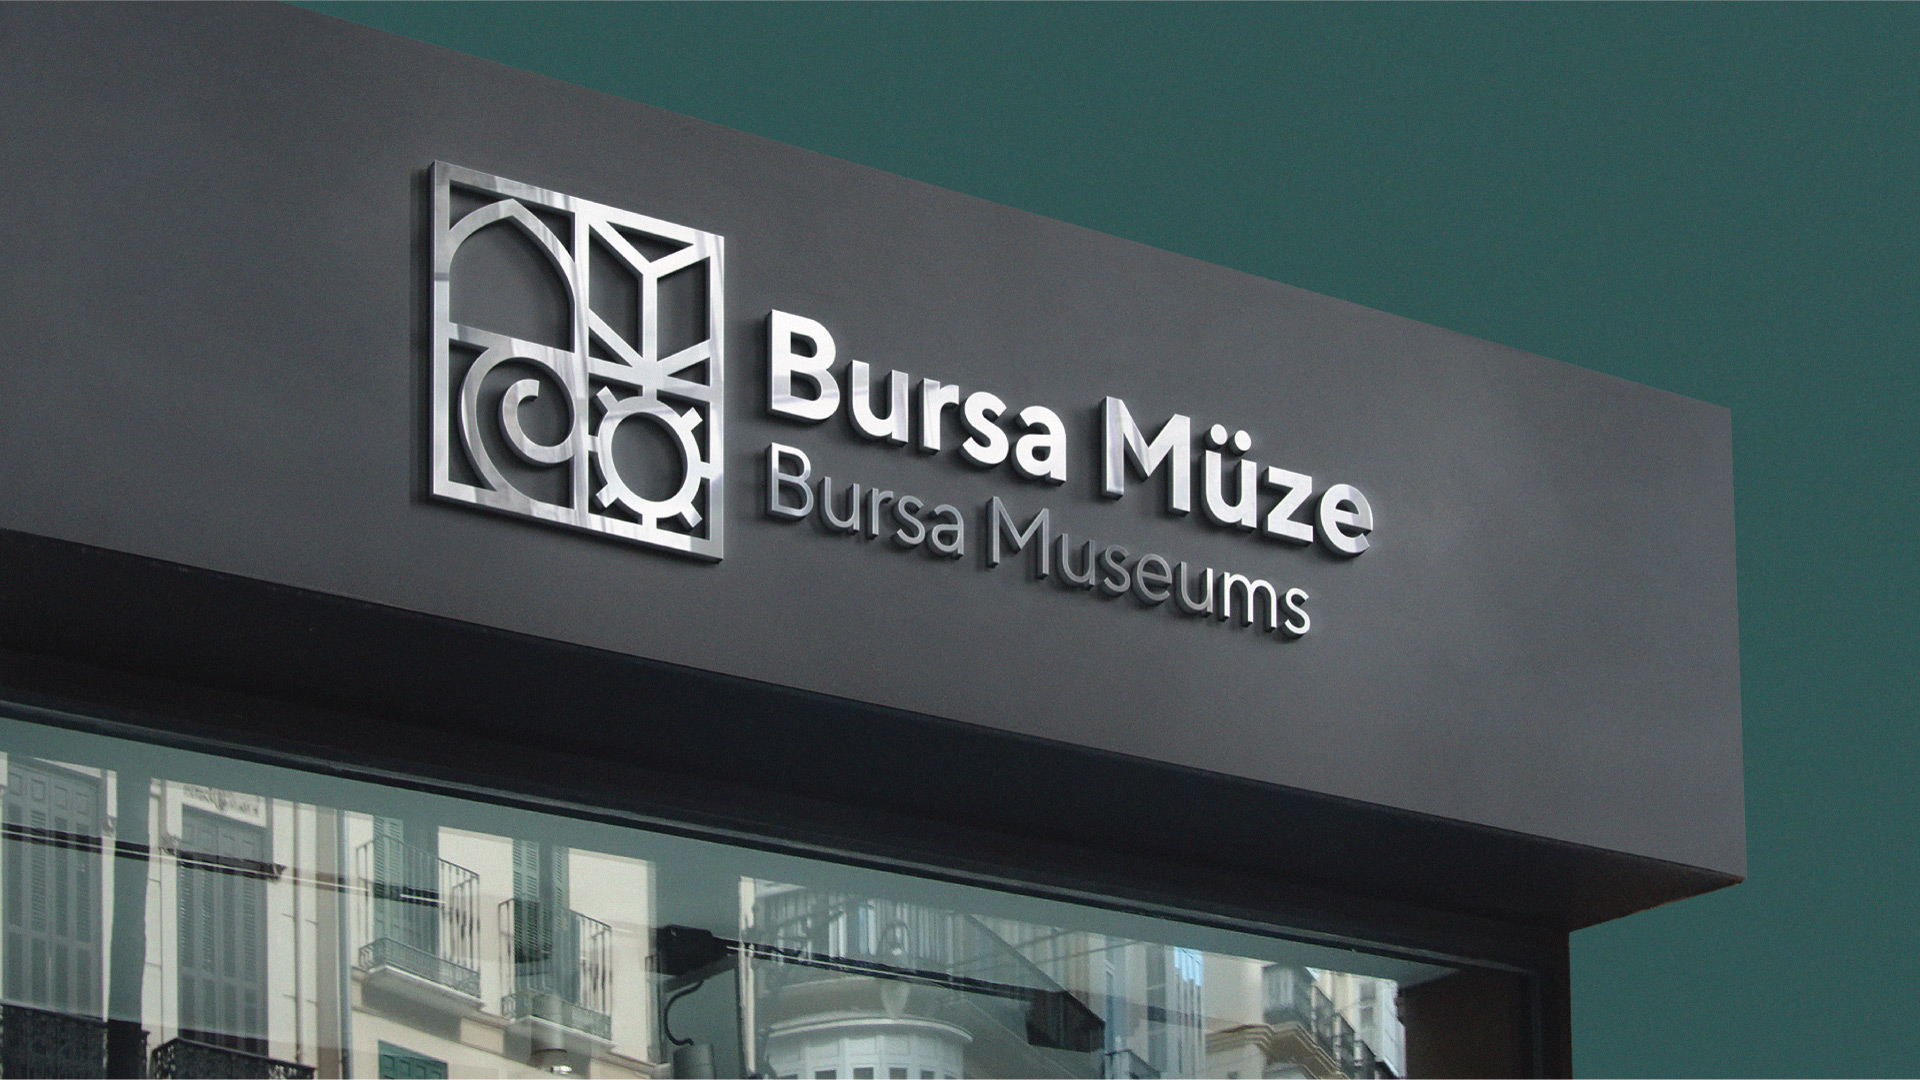 Bursa Mze